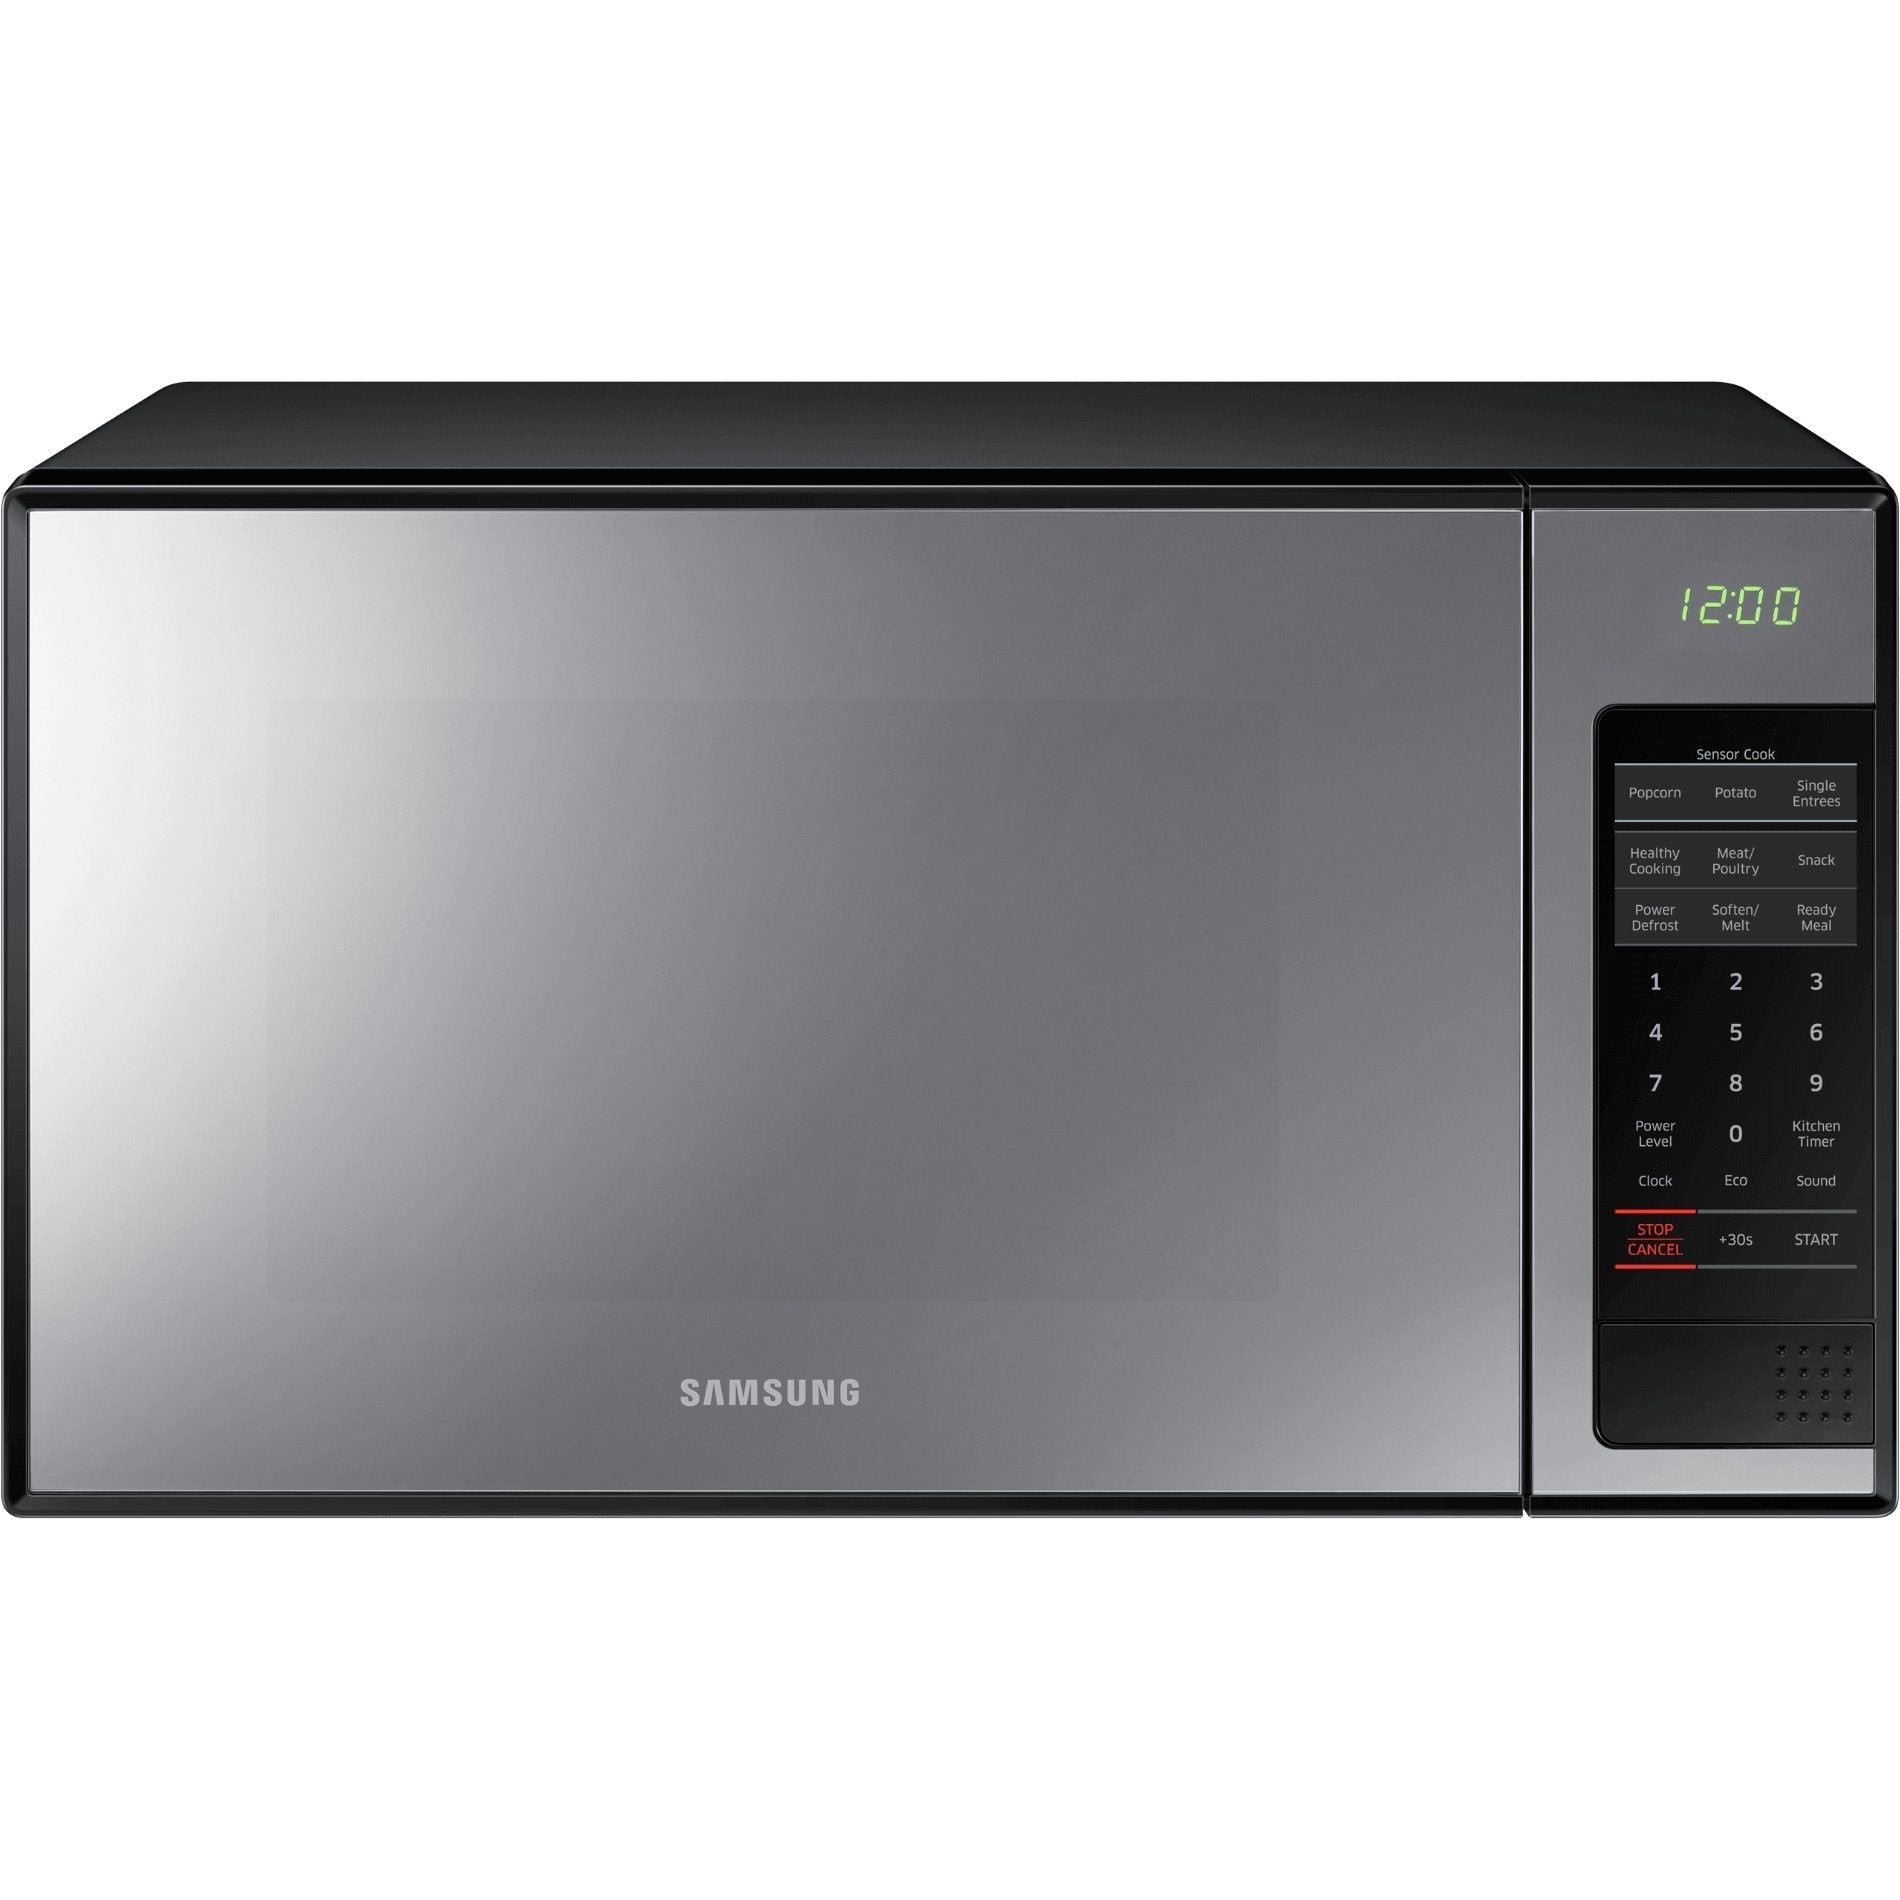 Samsung ME0113M1 32L Microwave - New World